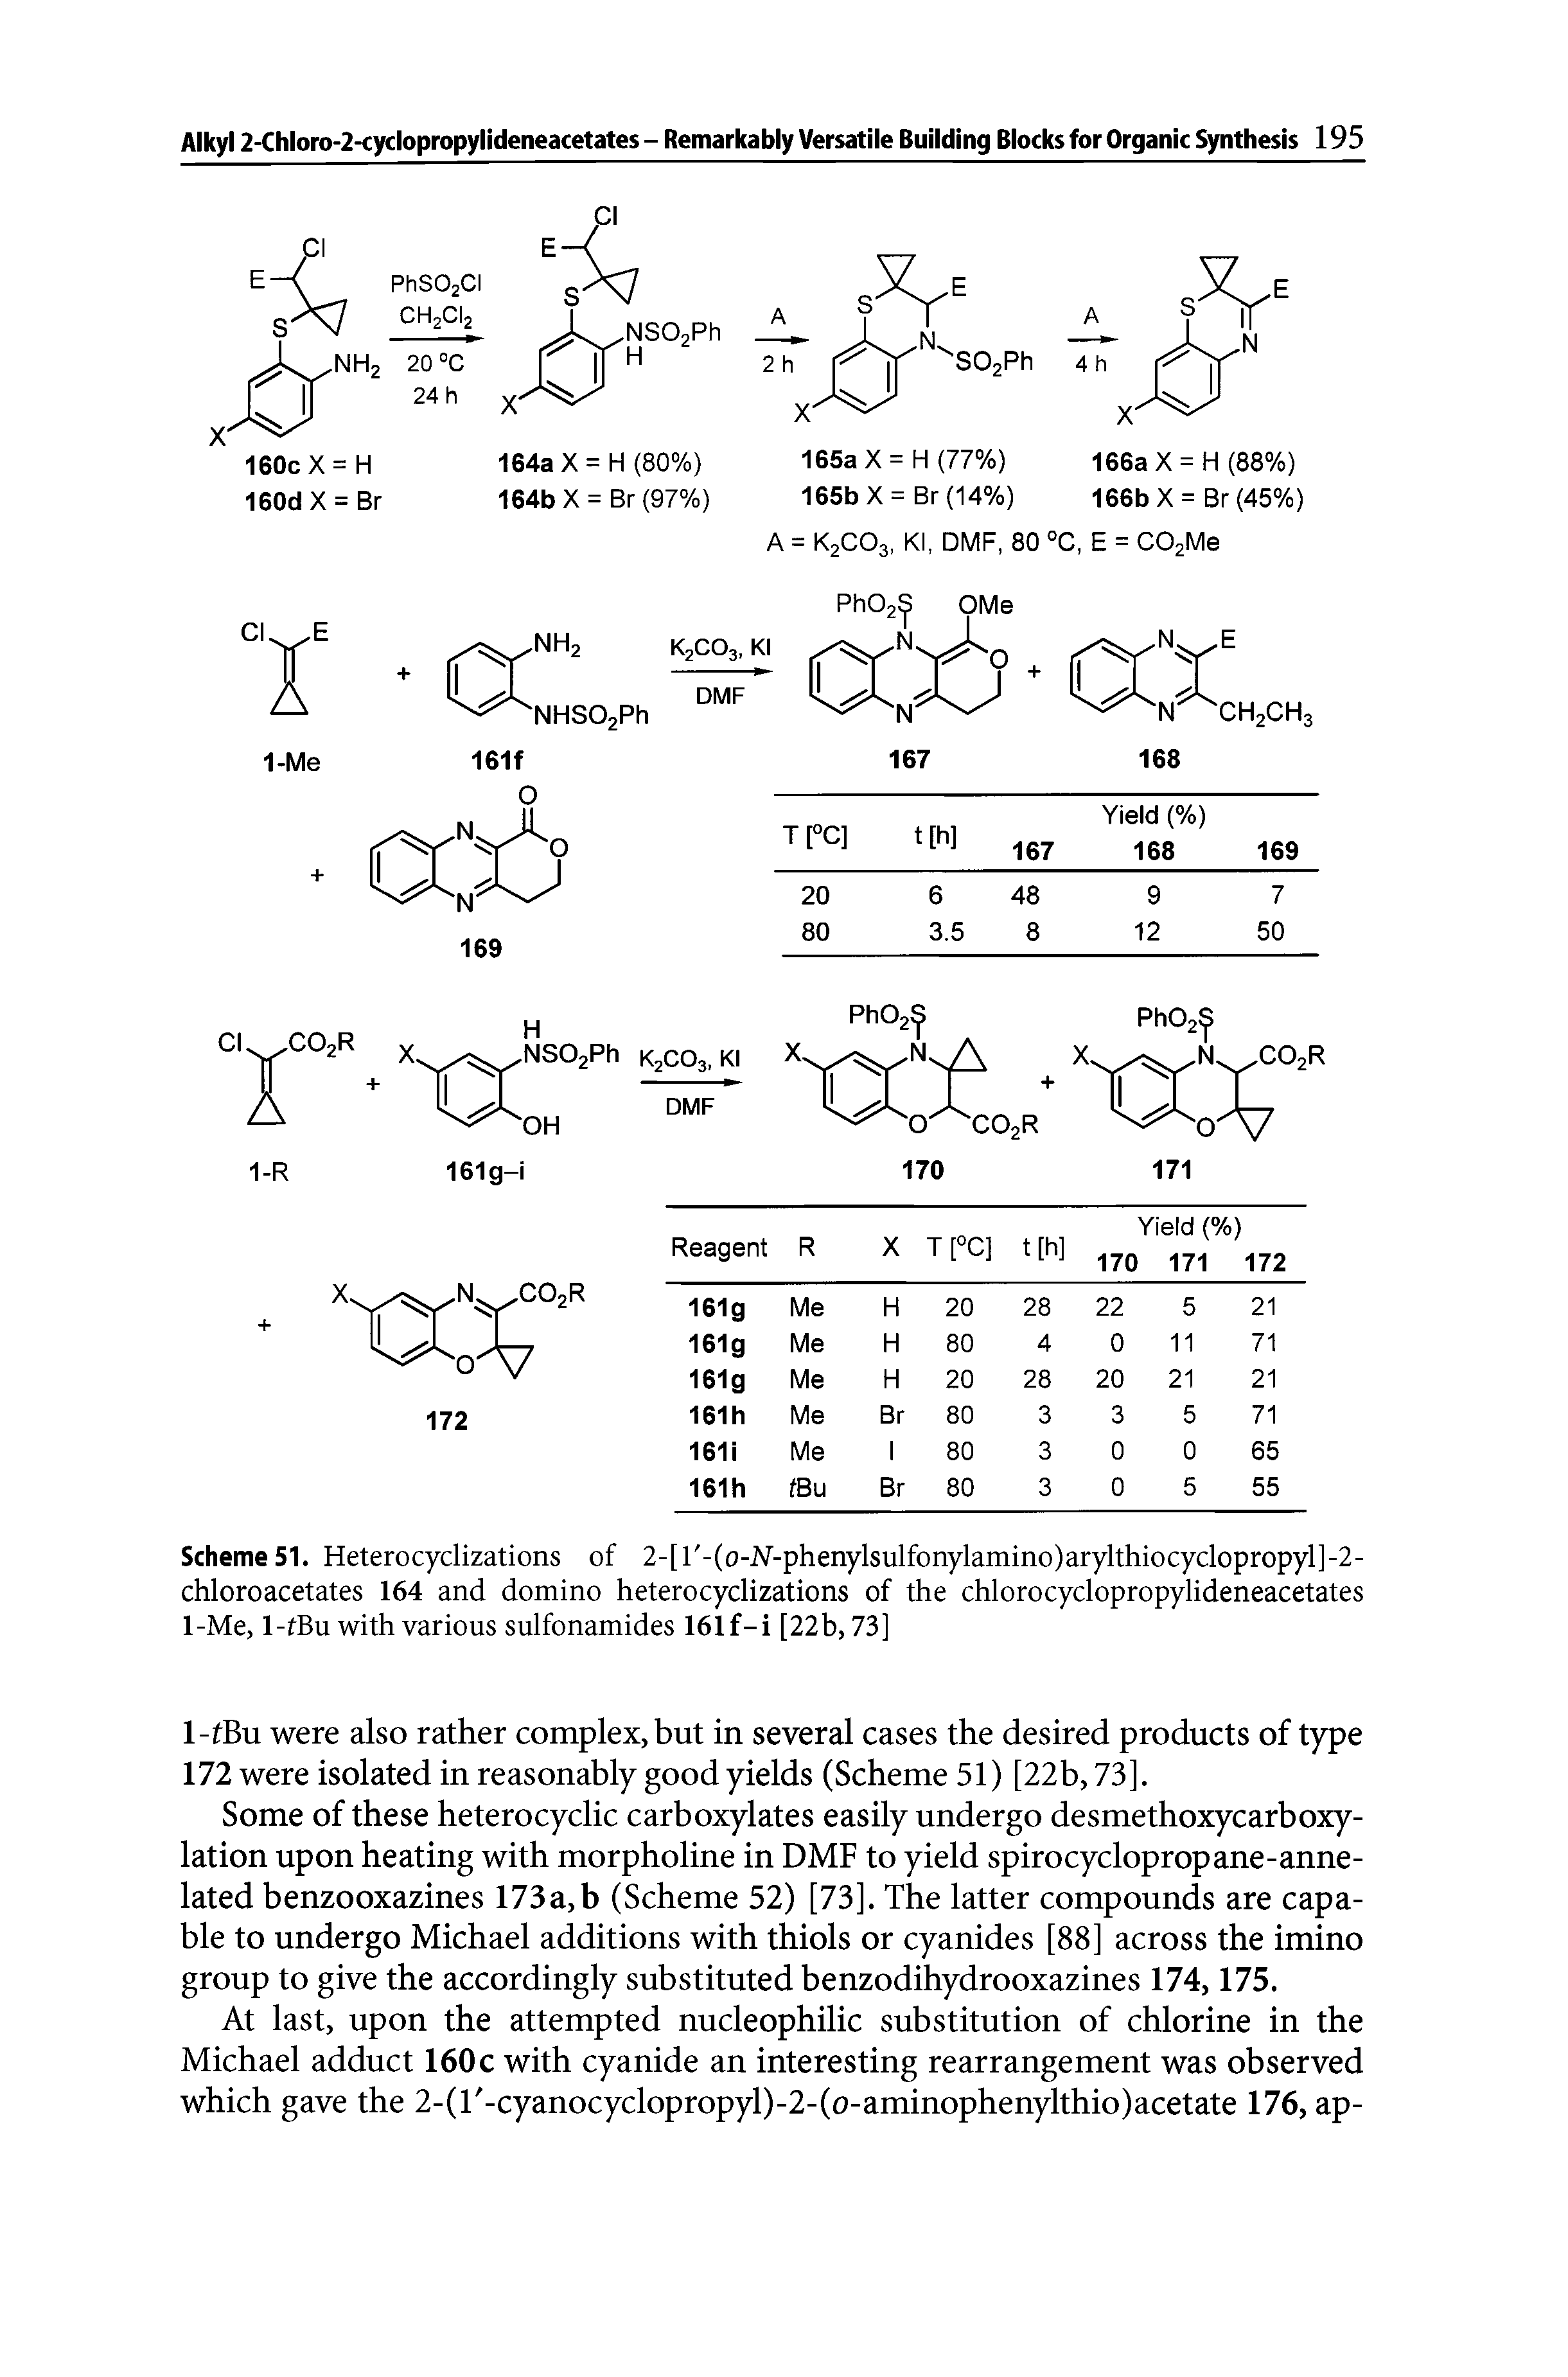 Scheme51. Heterocyclizations of 2-[r-(o-Ar-phenylsulfonylamino)arylthiocyclopropyl]-2-chloroacetates 164 and domino heterocyclizations of the chlorocyclopropylideneacetates 1-Me, 1-tBu with various sulfonamides 161 f-i [22b, 73]...